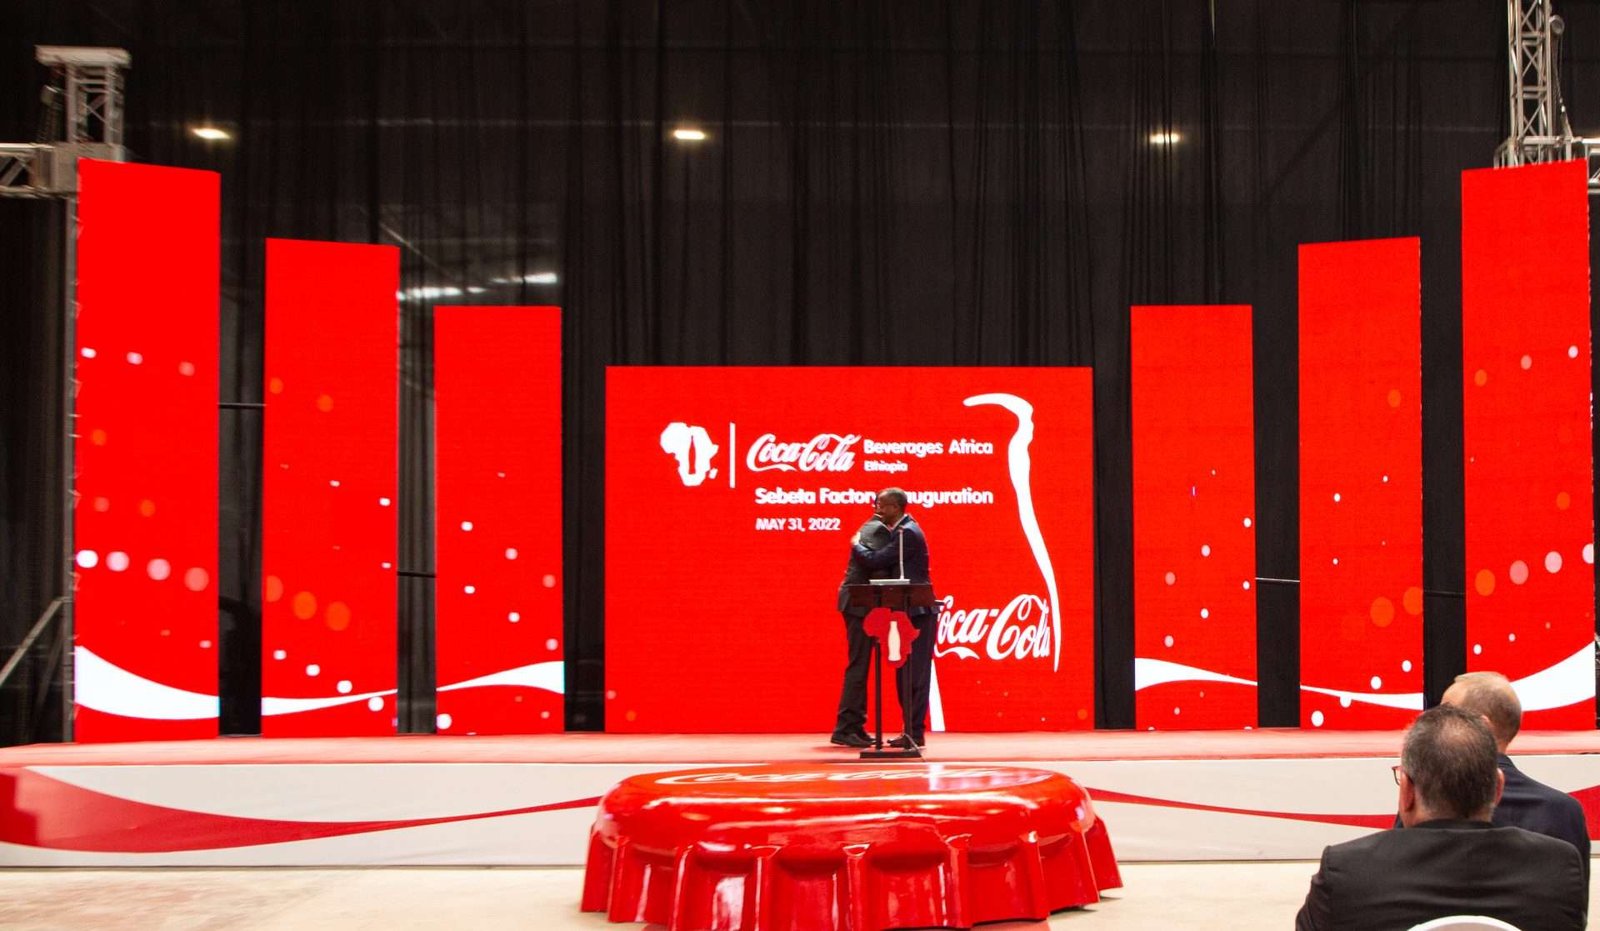 coca cola factory inaguration event photo